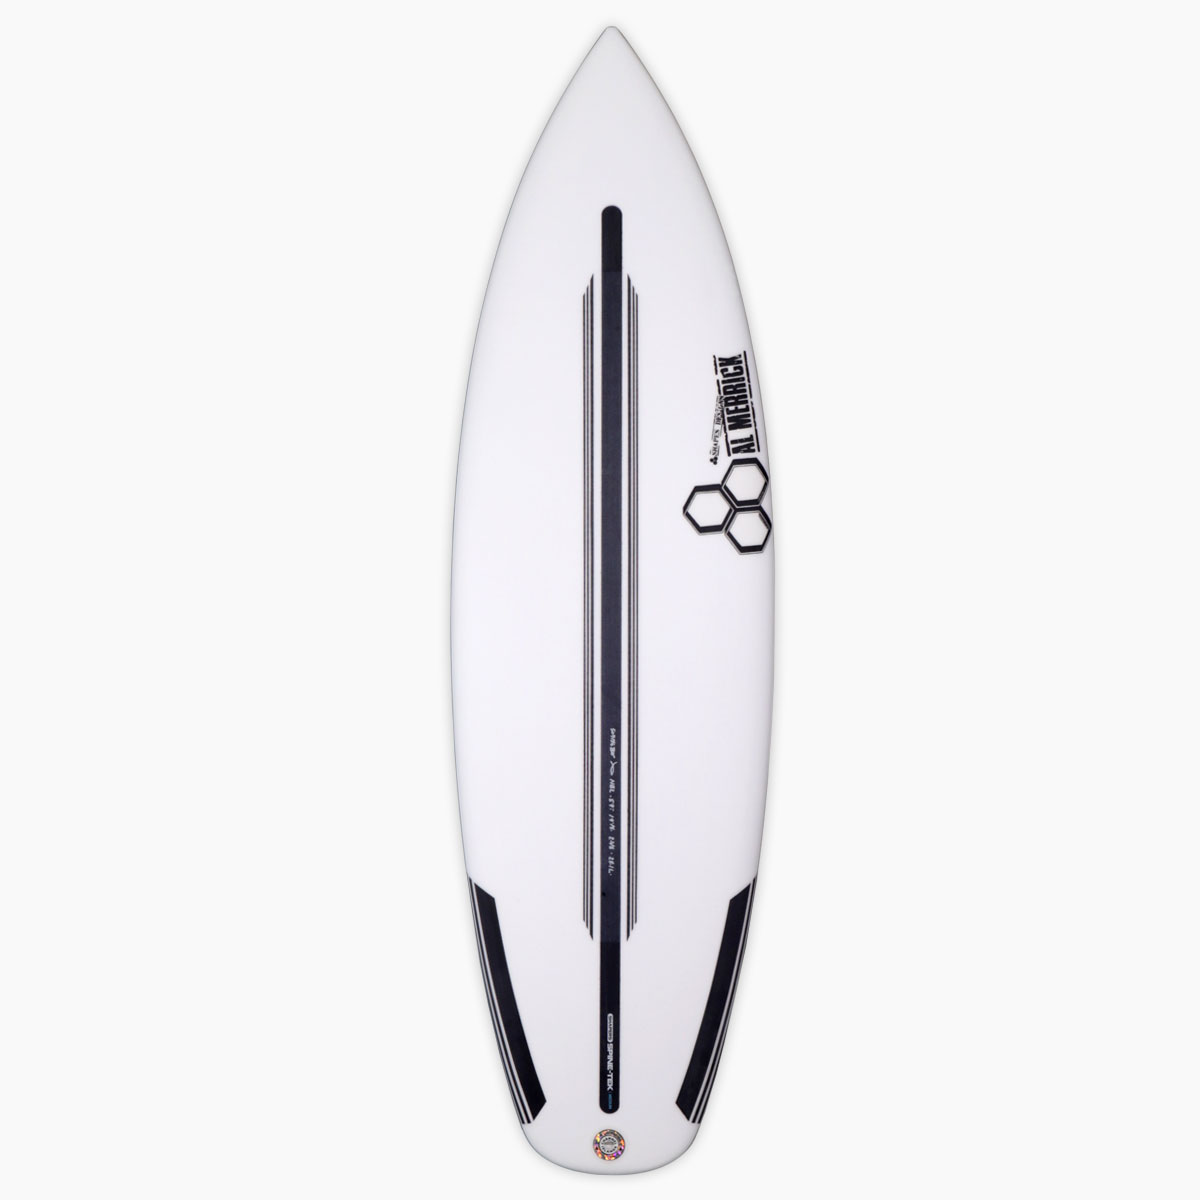 SurfBoardNet / ブランド:CHANNEL ISLANDS モデル:NeckBeard3 SPINE